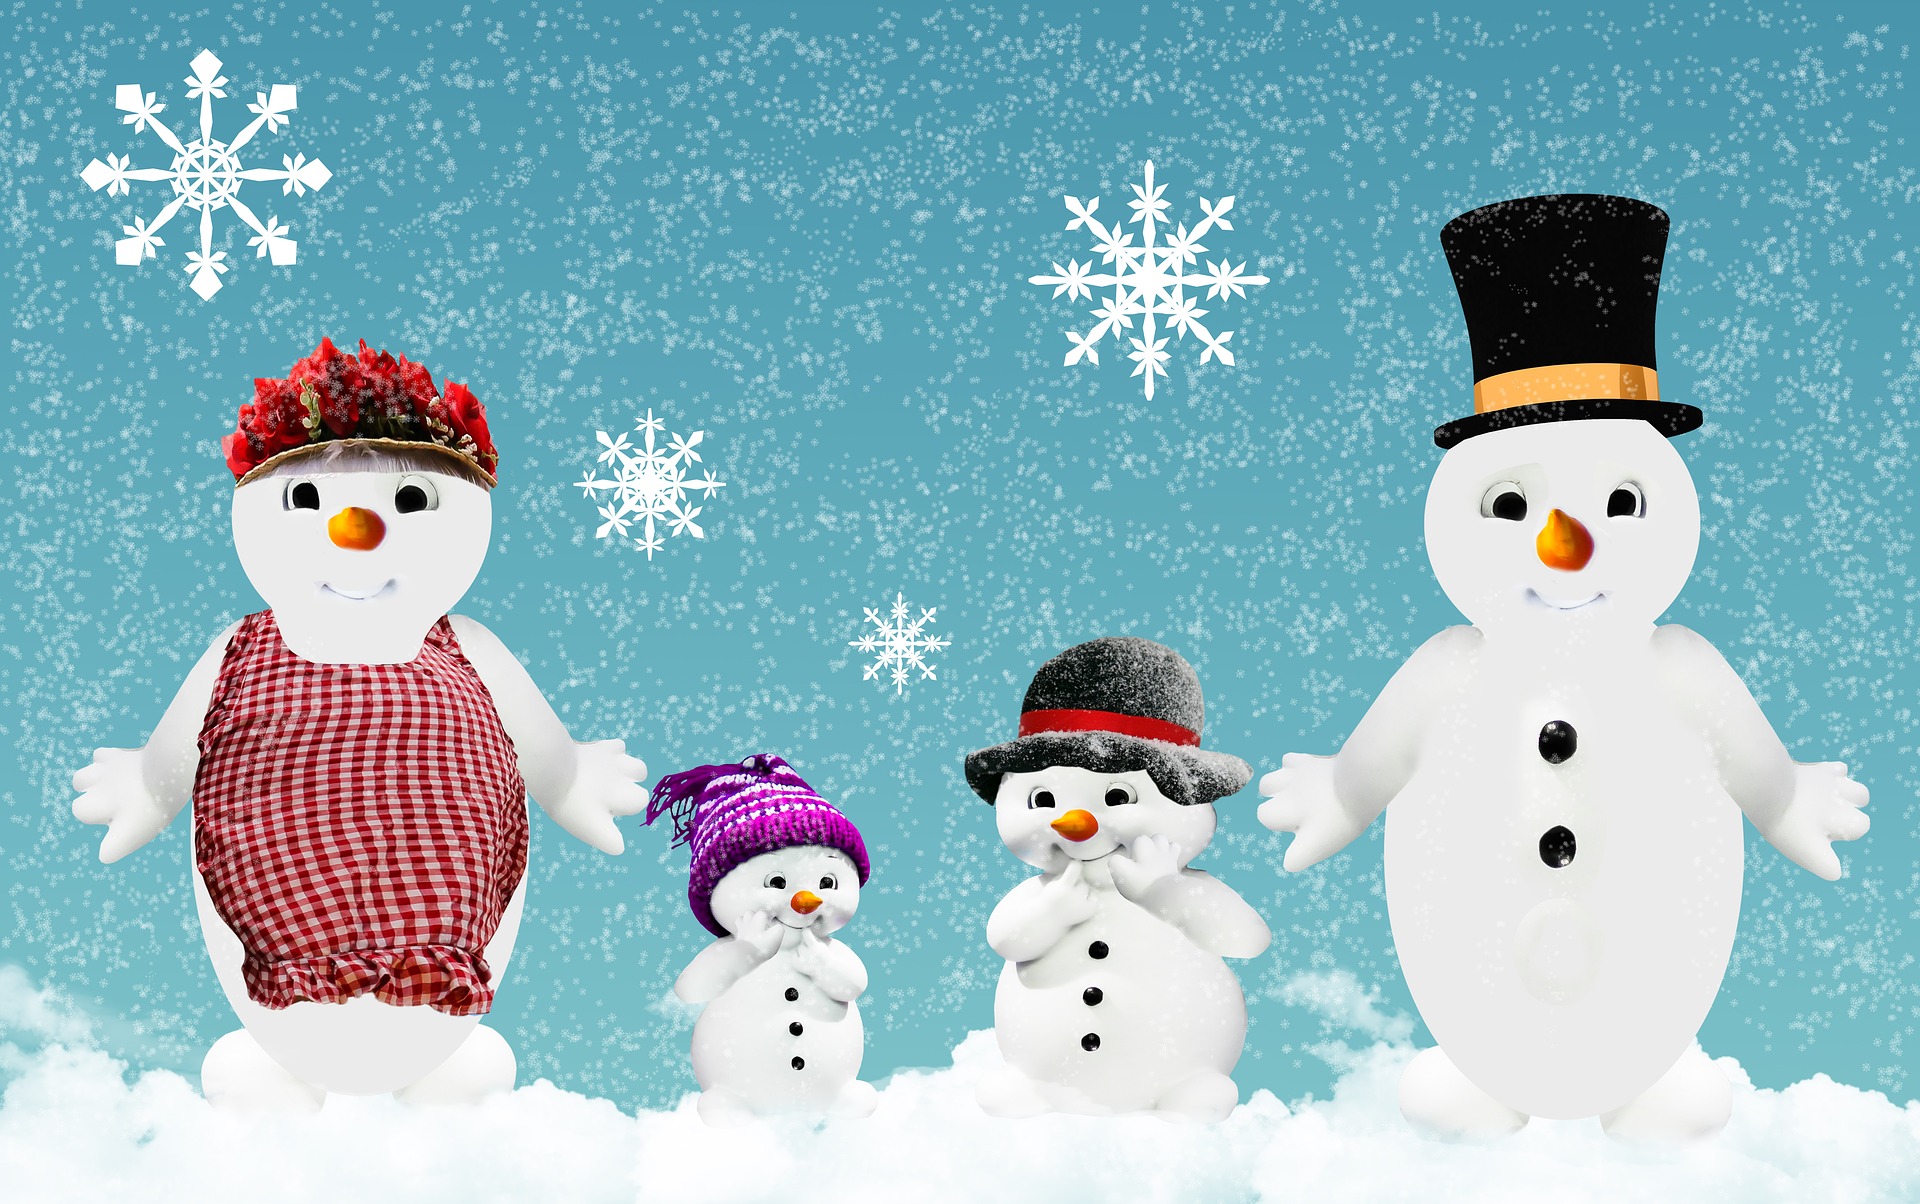 Three Snowman on a snowy blue background.